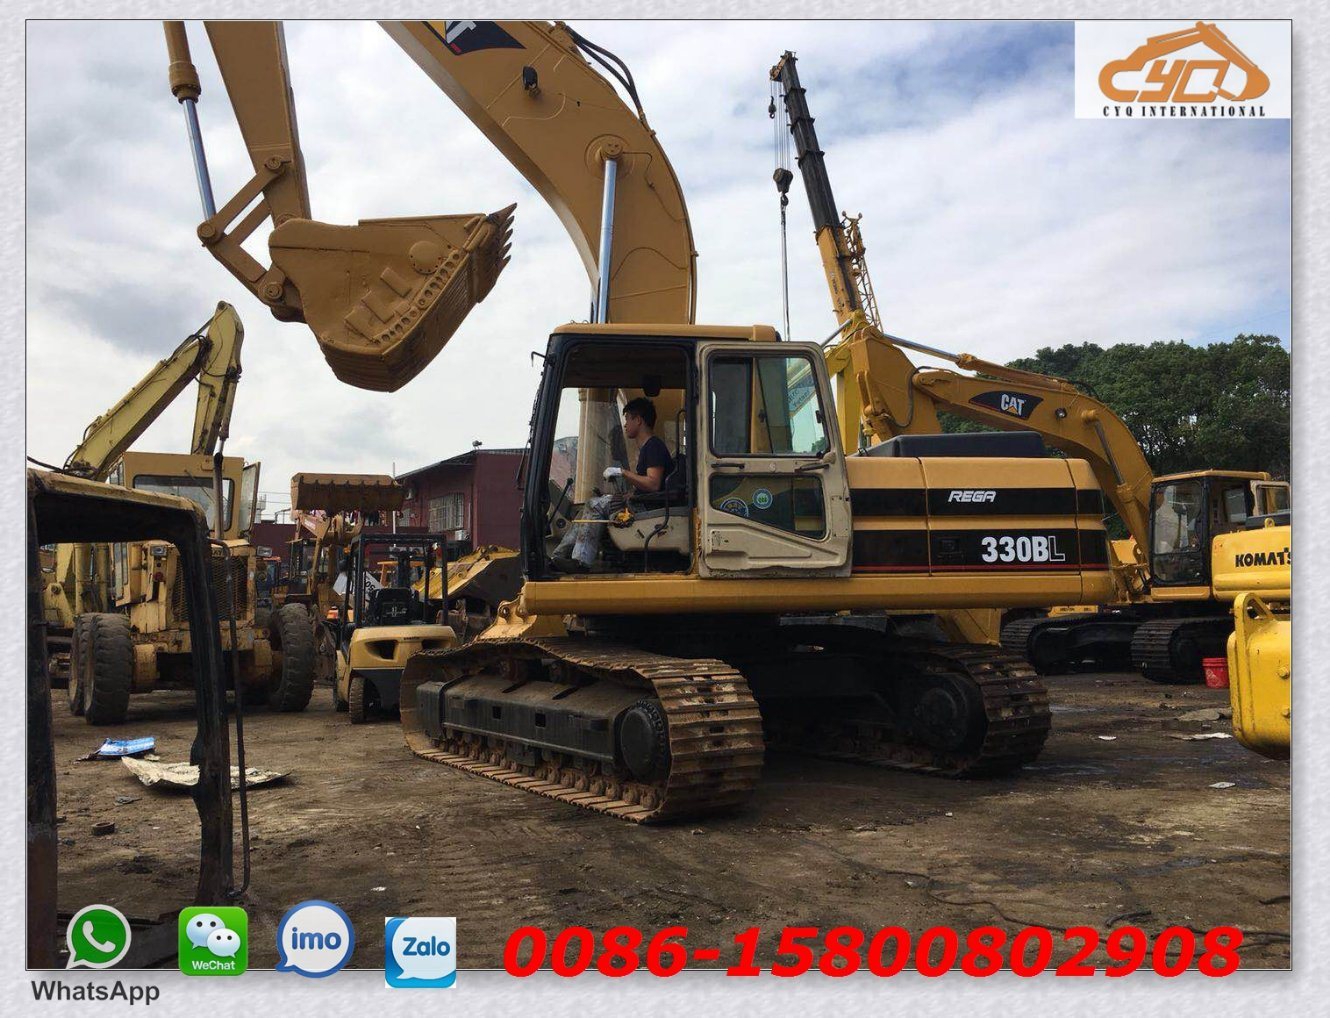 Used Cat 330bl Hydraulic Crawler Excavator for Sale!